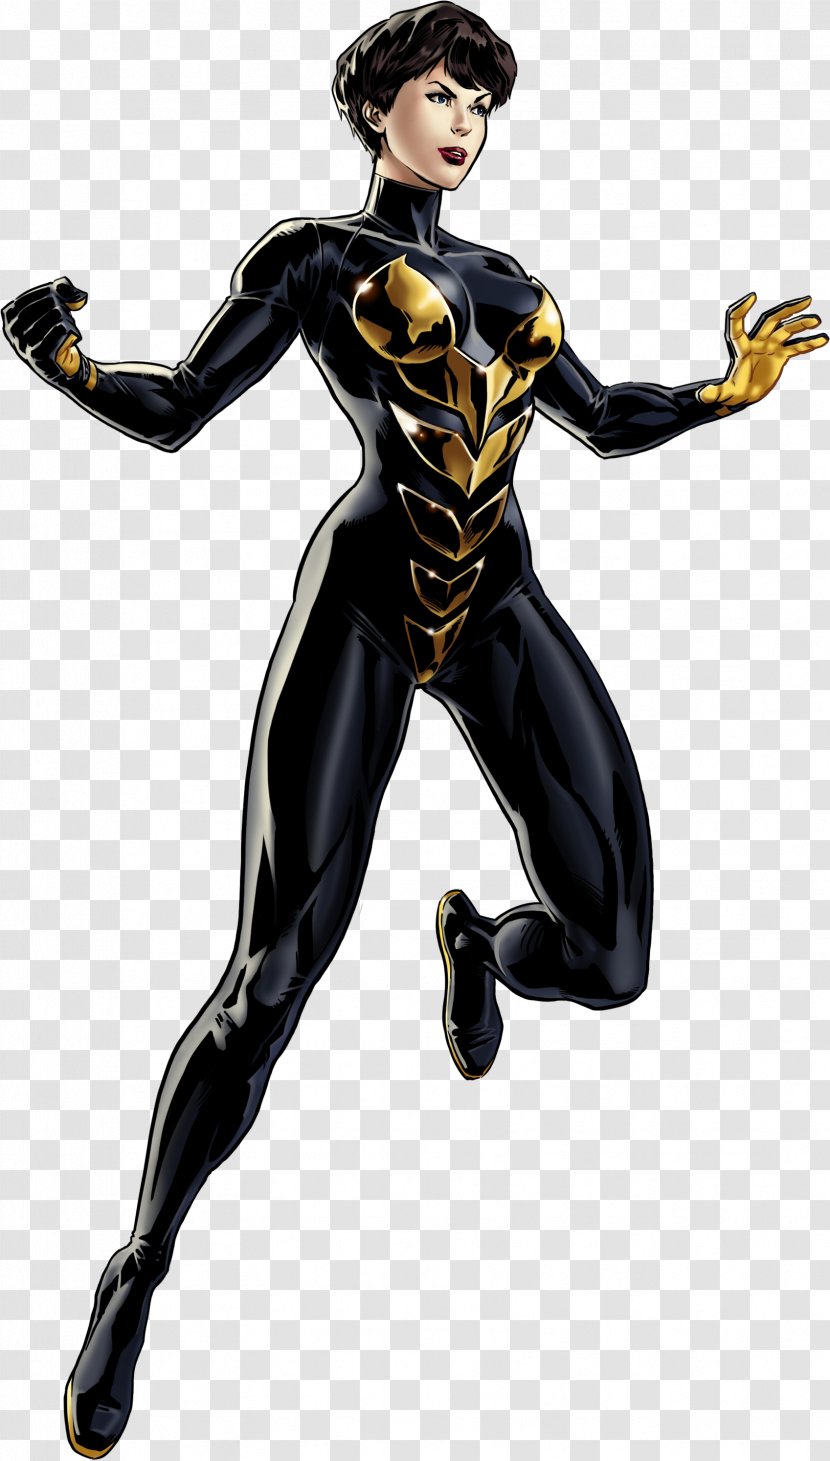 Marvel: Avengers Alliance Wasp Hank Pym Black Widow Mantis - Superhero - 3D Villain Transparent PNG